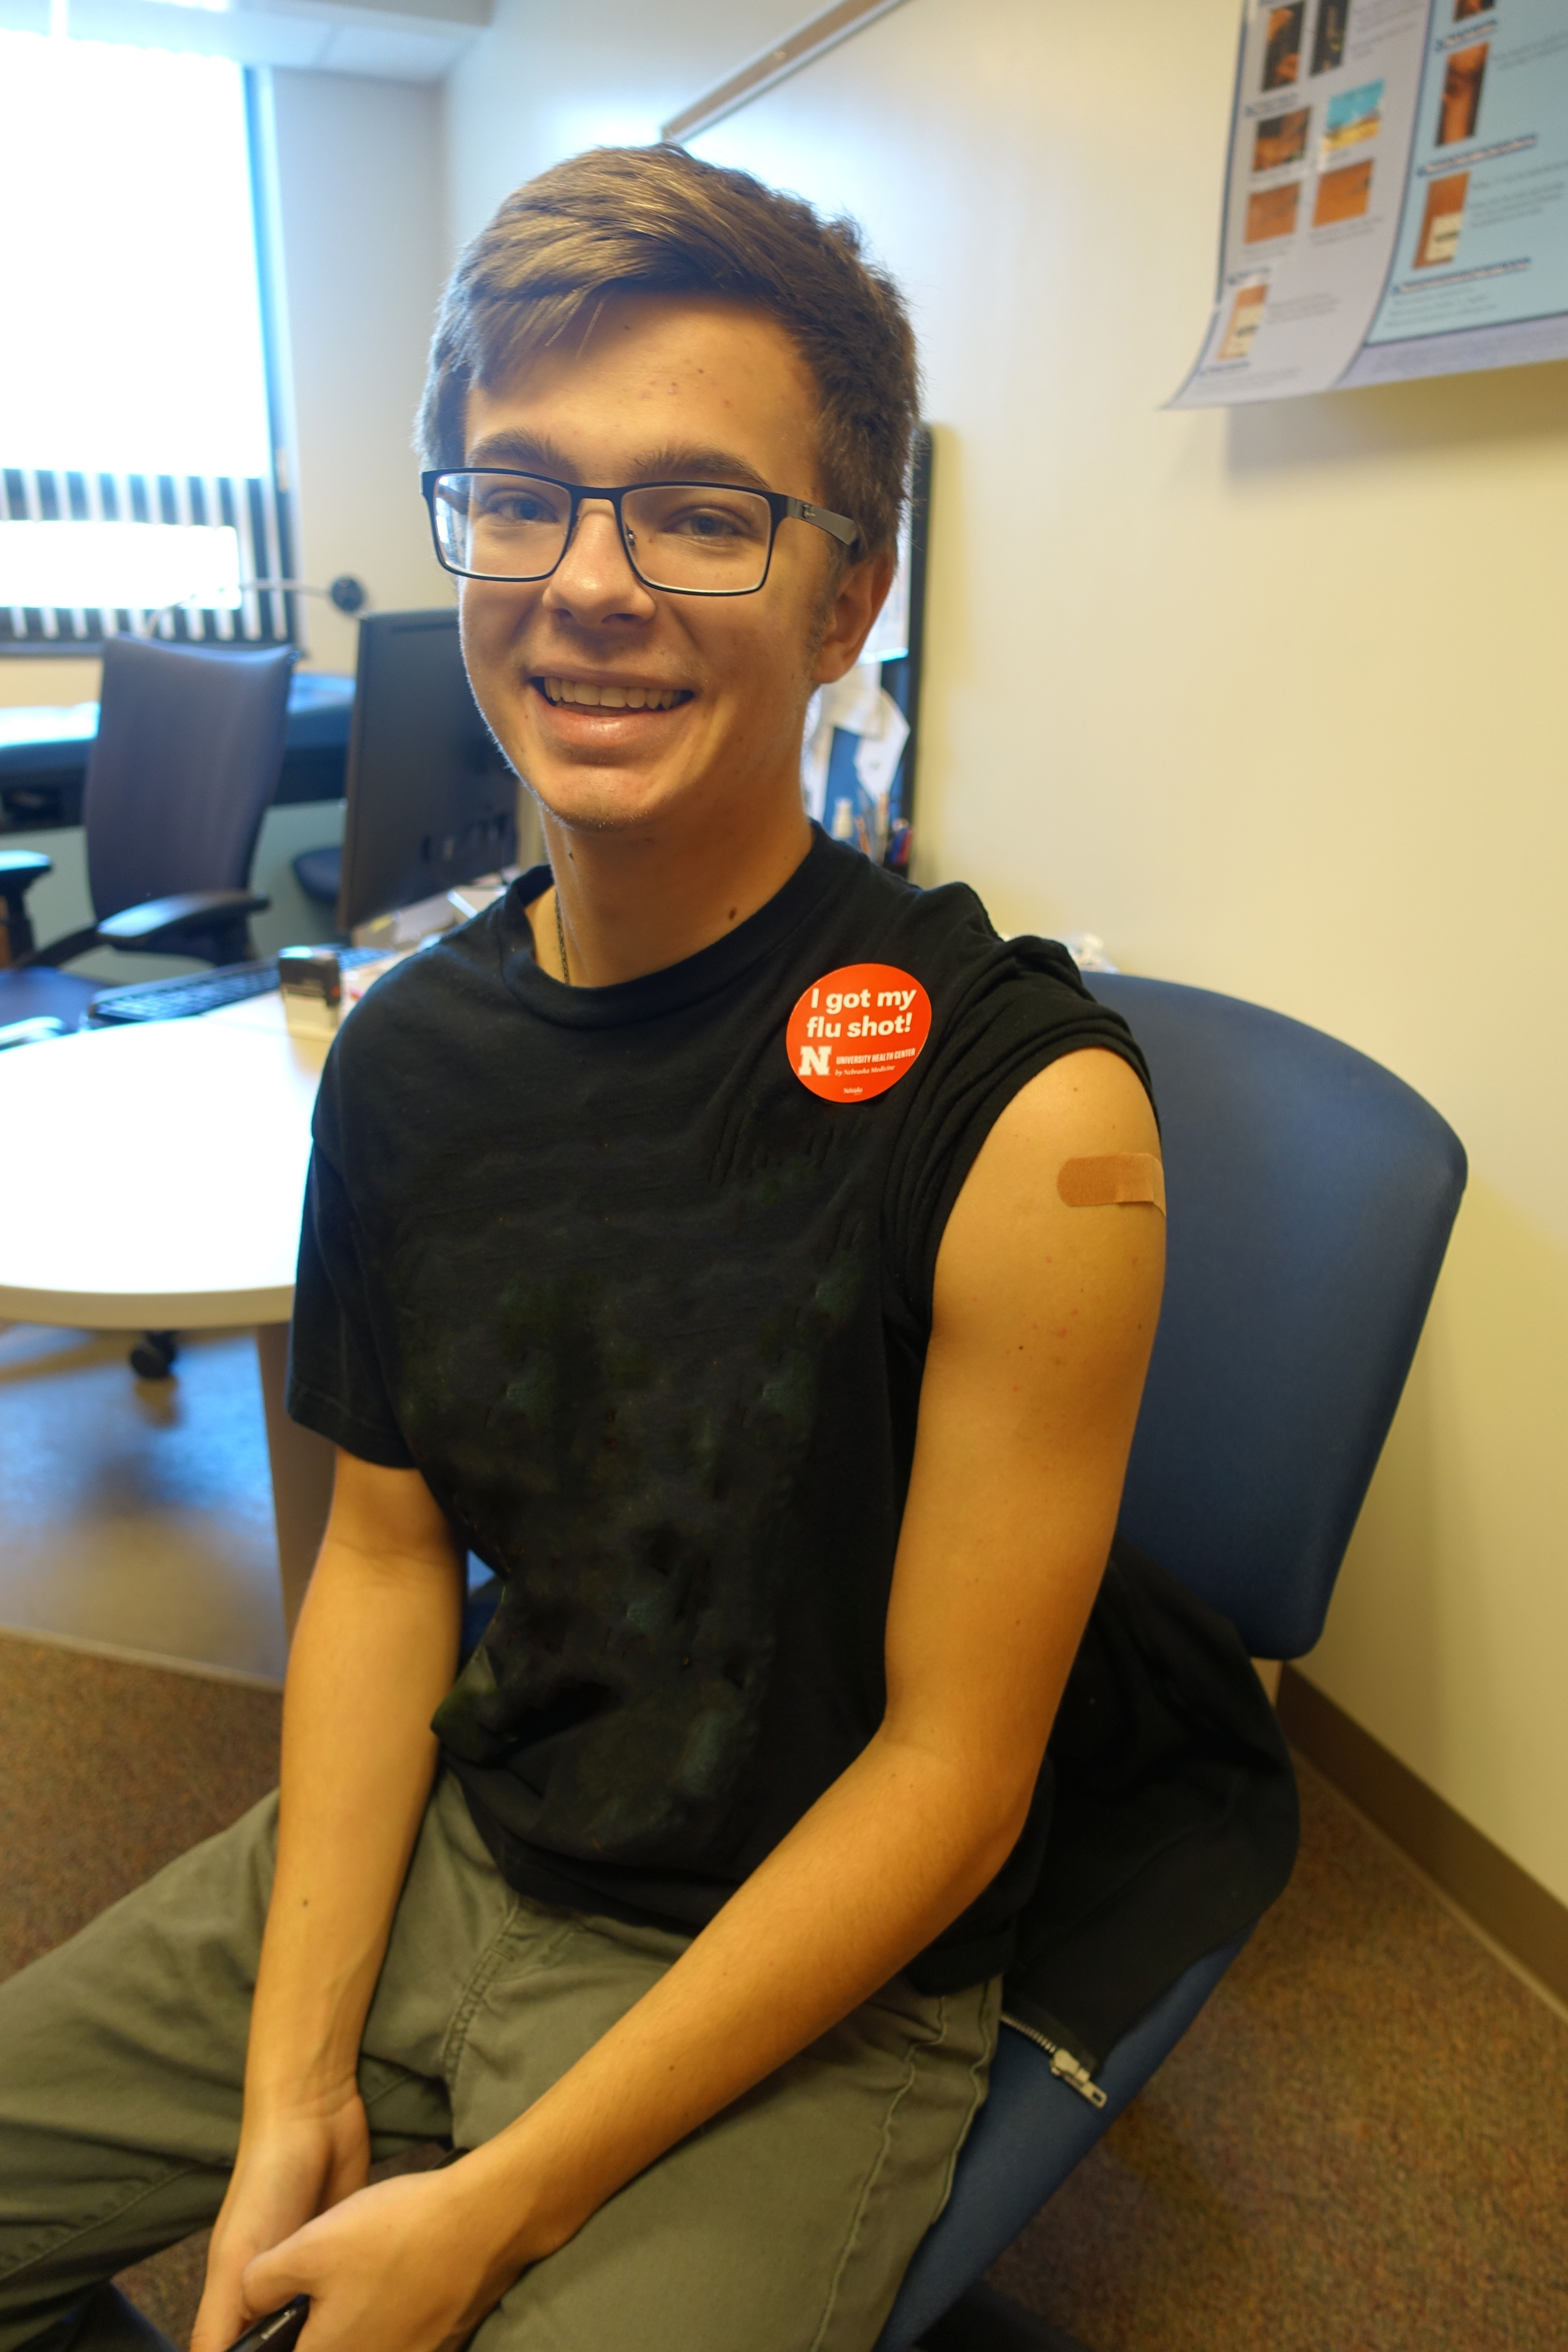 A Nebraska student proudly displays a sticker to show they got a flu shot.